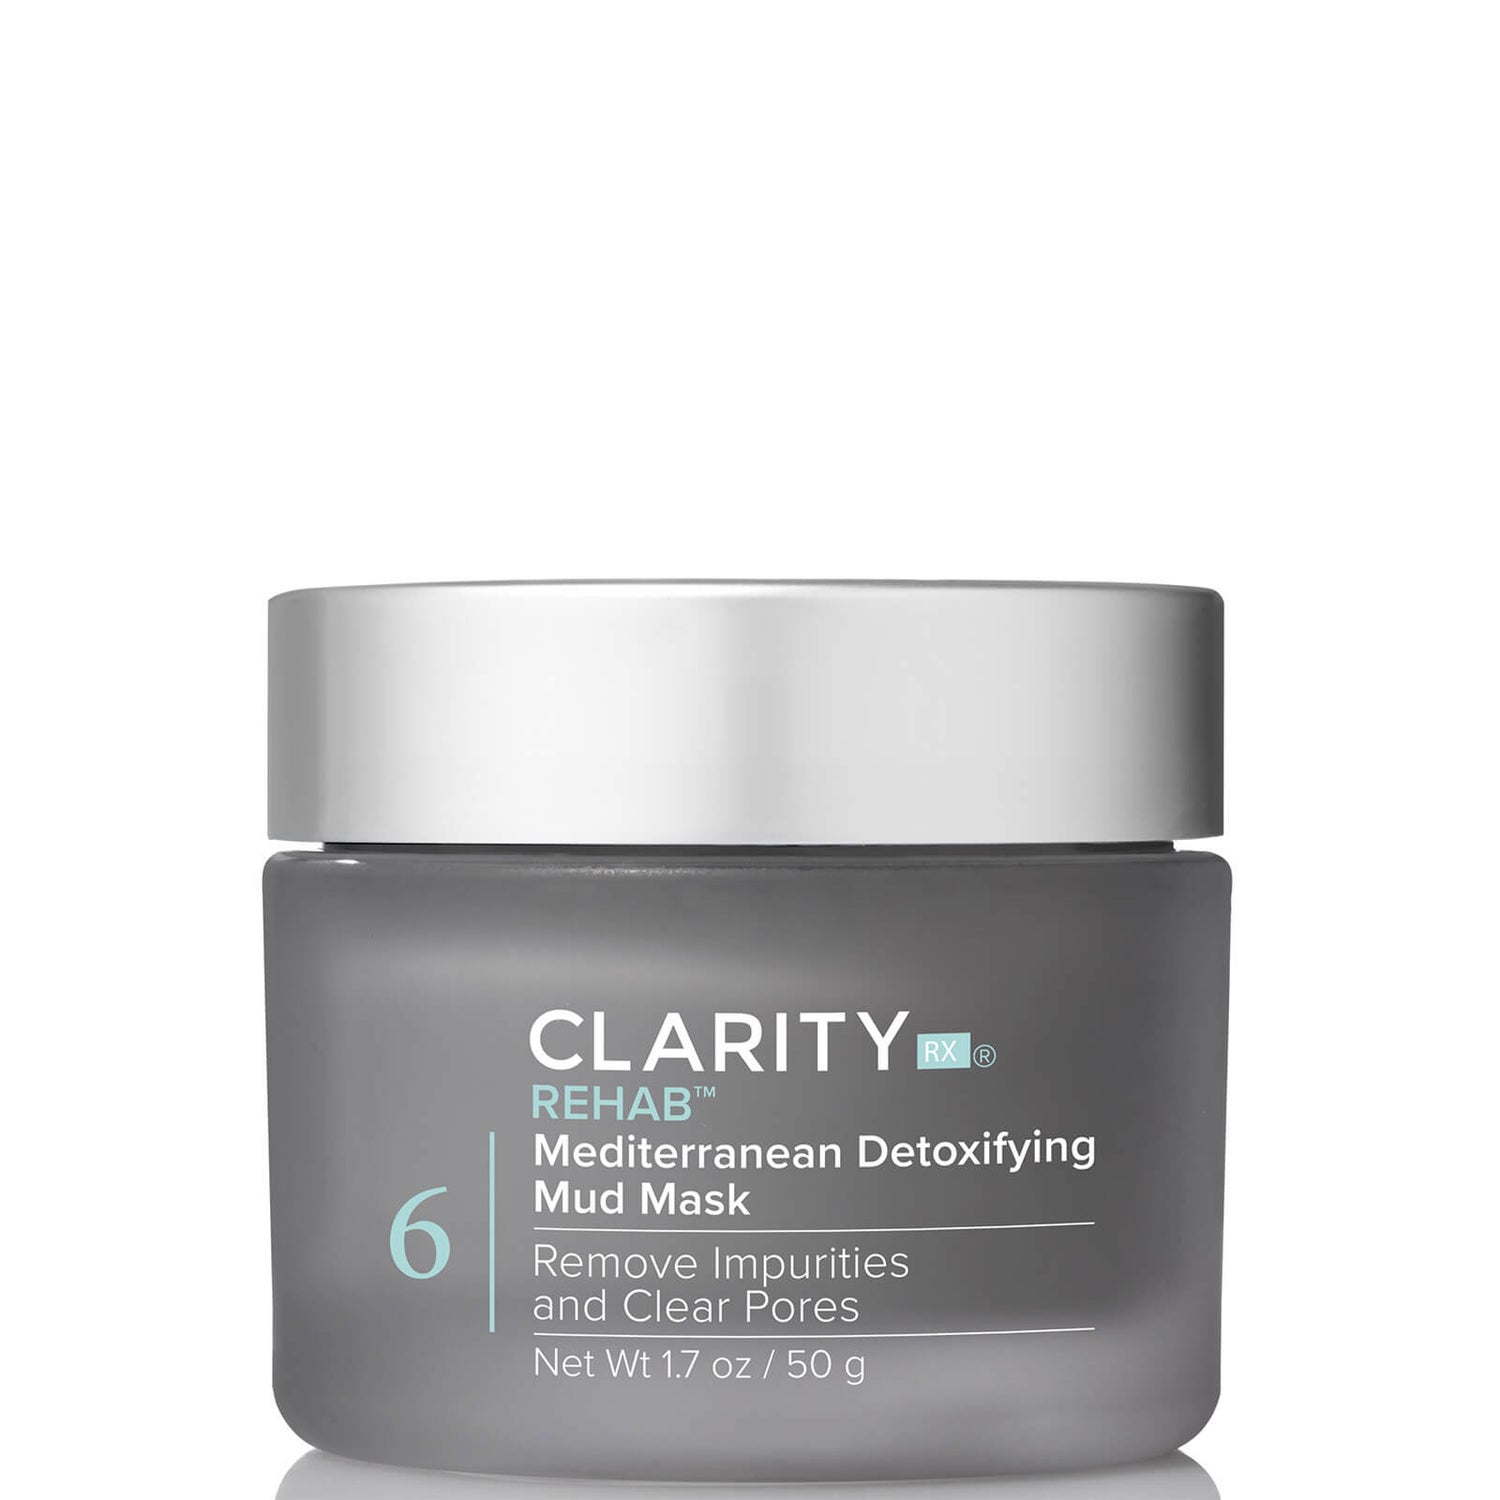 ClarityRx Rehab Mediterranean Detoxifying Mud Mask (1.7 oz.)